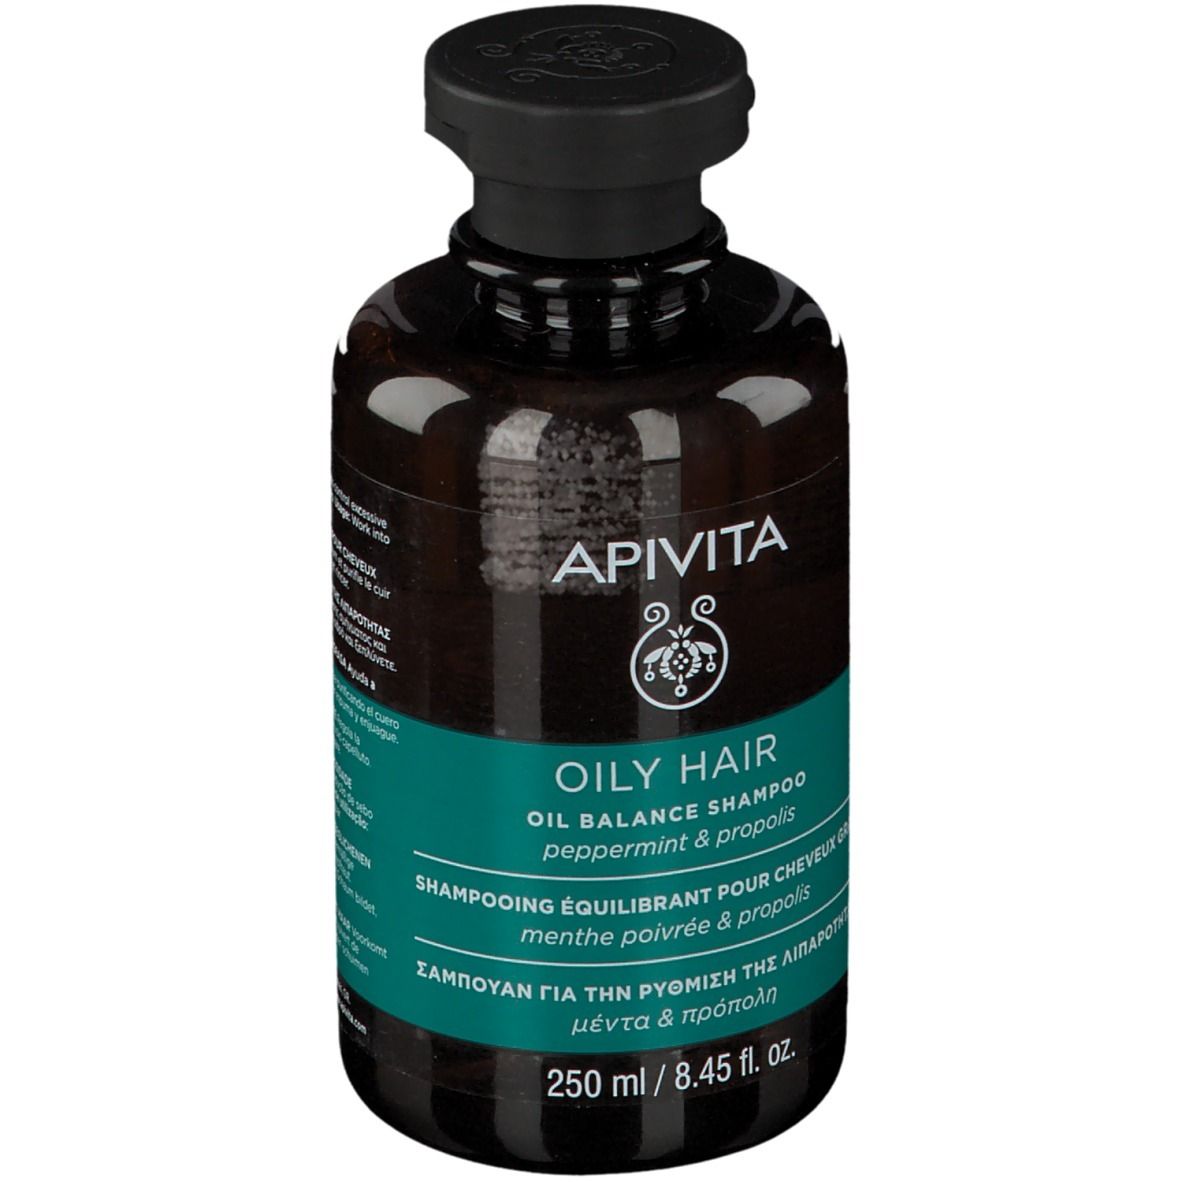 APIVITA OILY HAIR Shampoo Sebo-regolatore